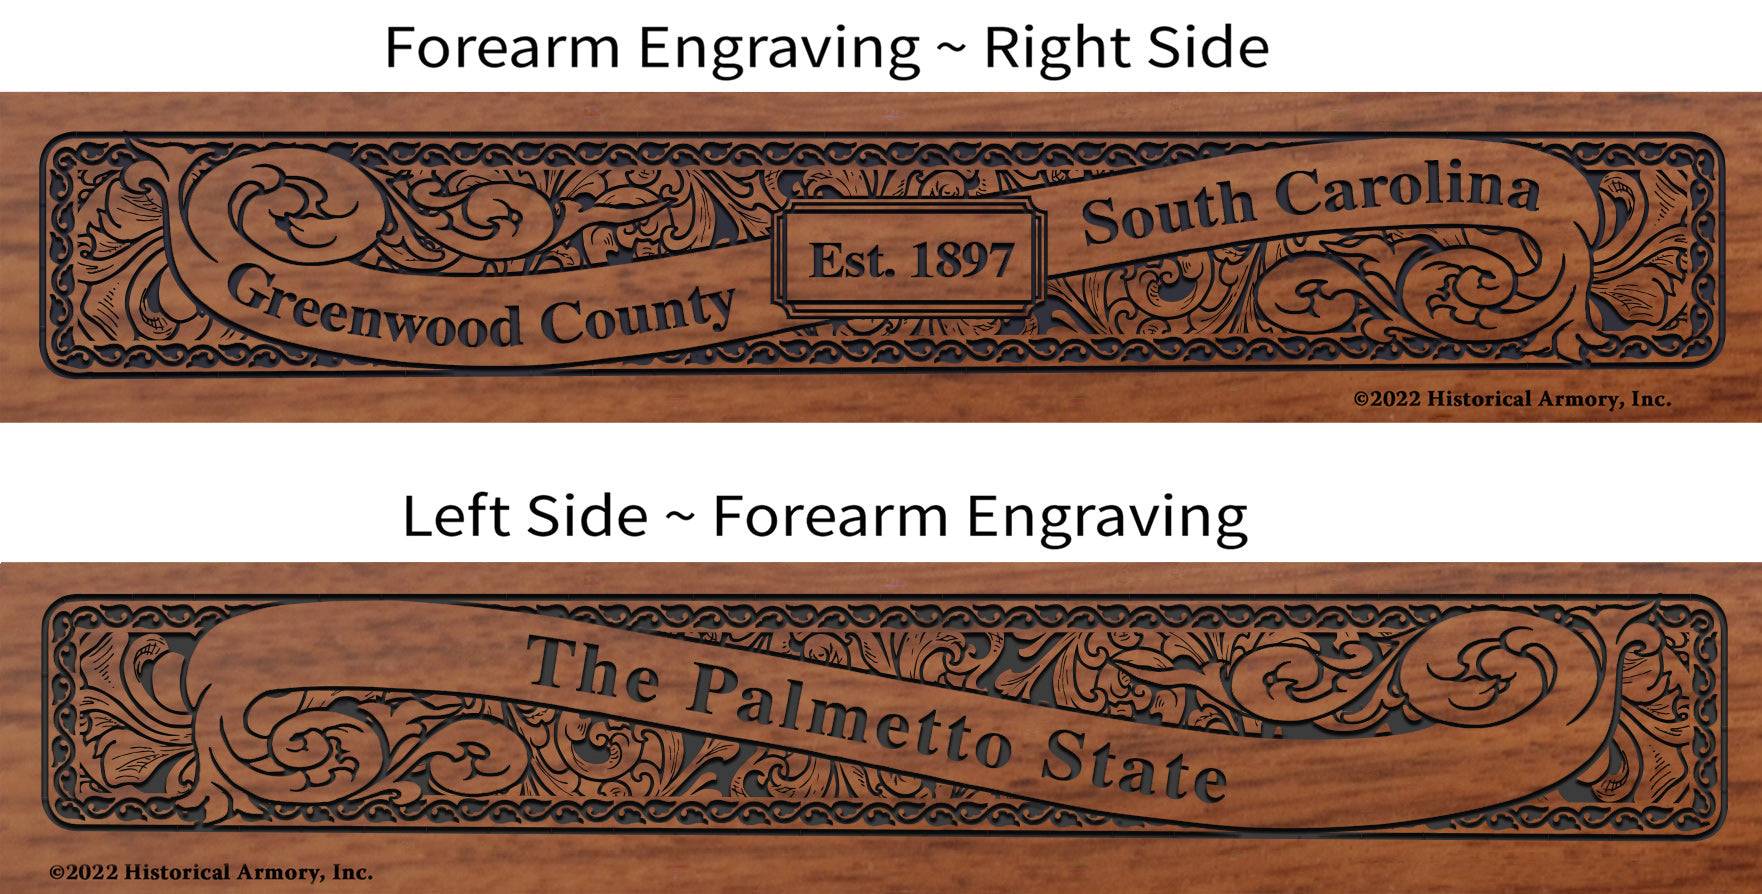 Greenwood County South Carolina Engraved Rifle Forearm